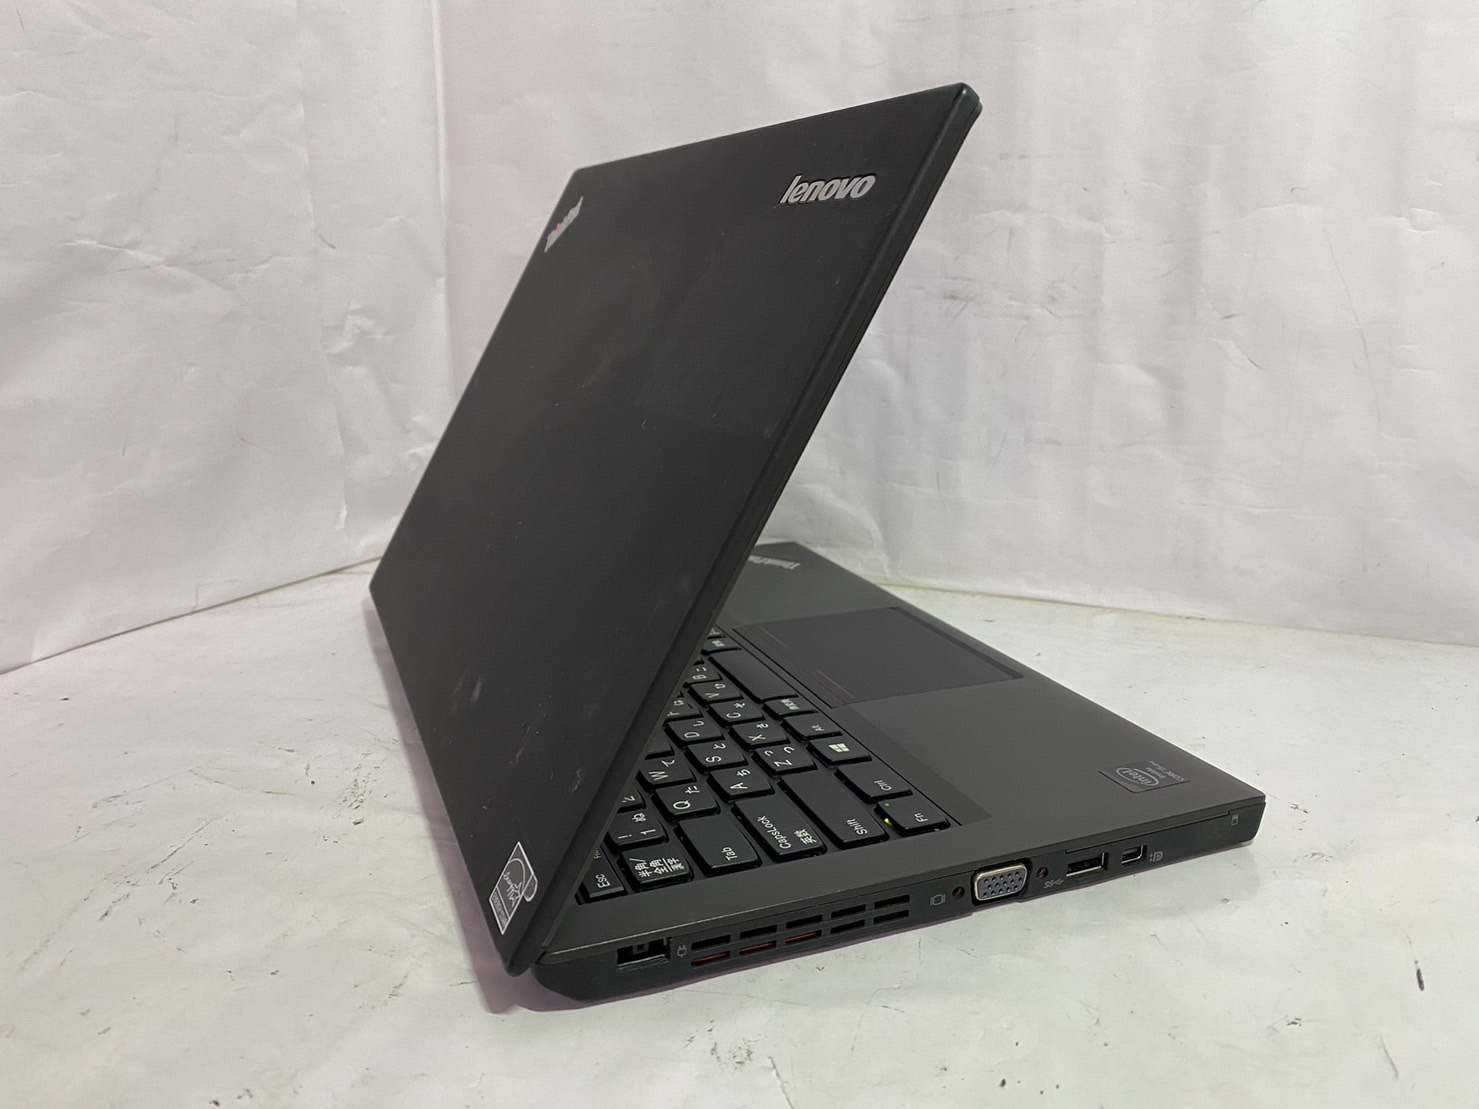 LENOVO(レノボ) ThinkPad X240 20ALA006JPの激安通販 - パソコン ...